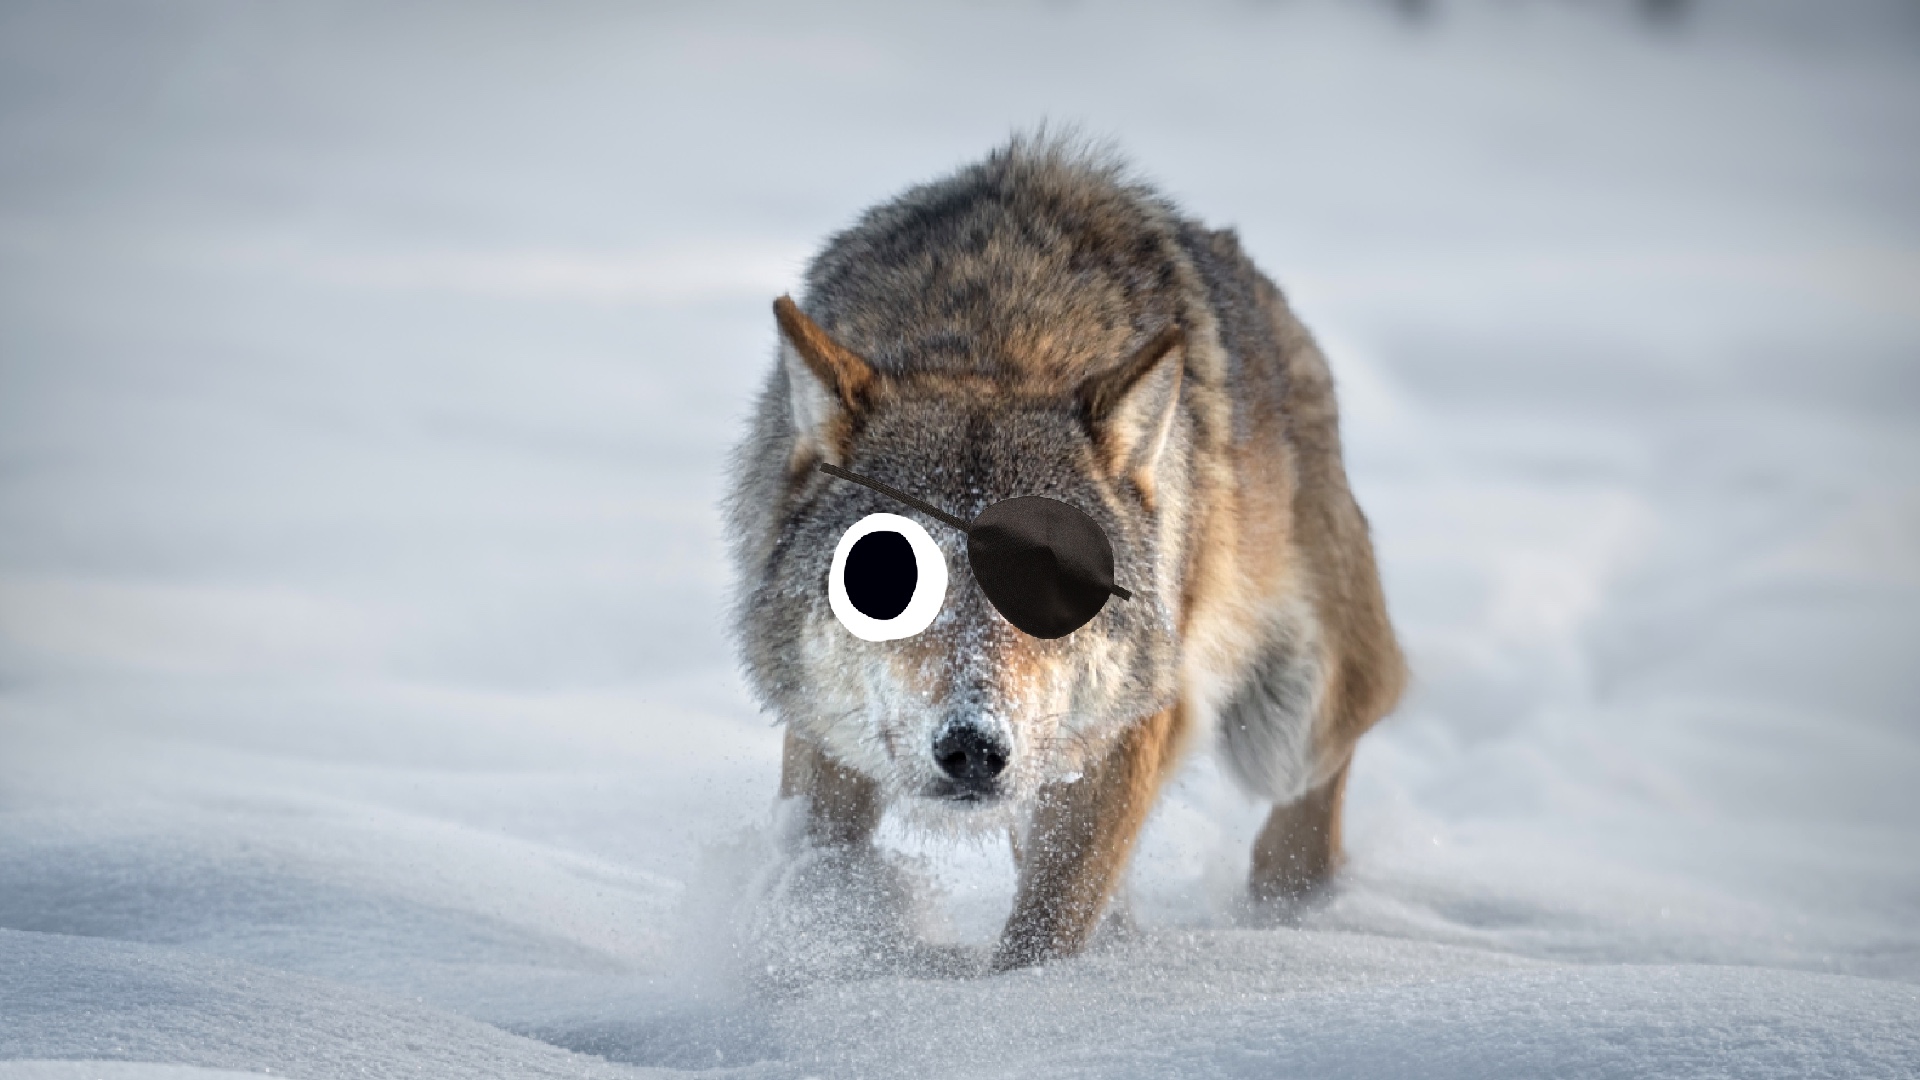 A wolf wearing an eye patch